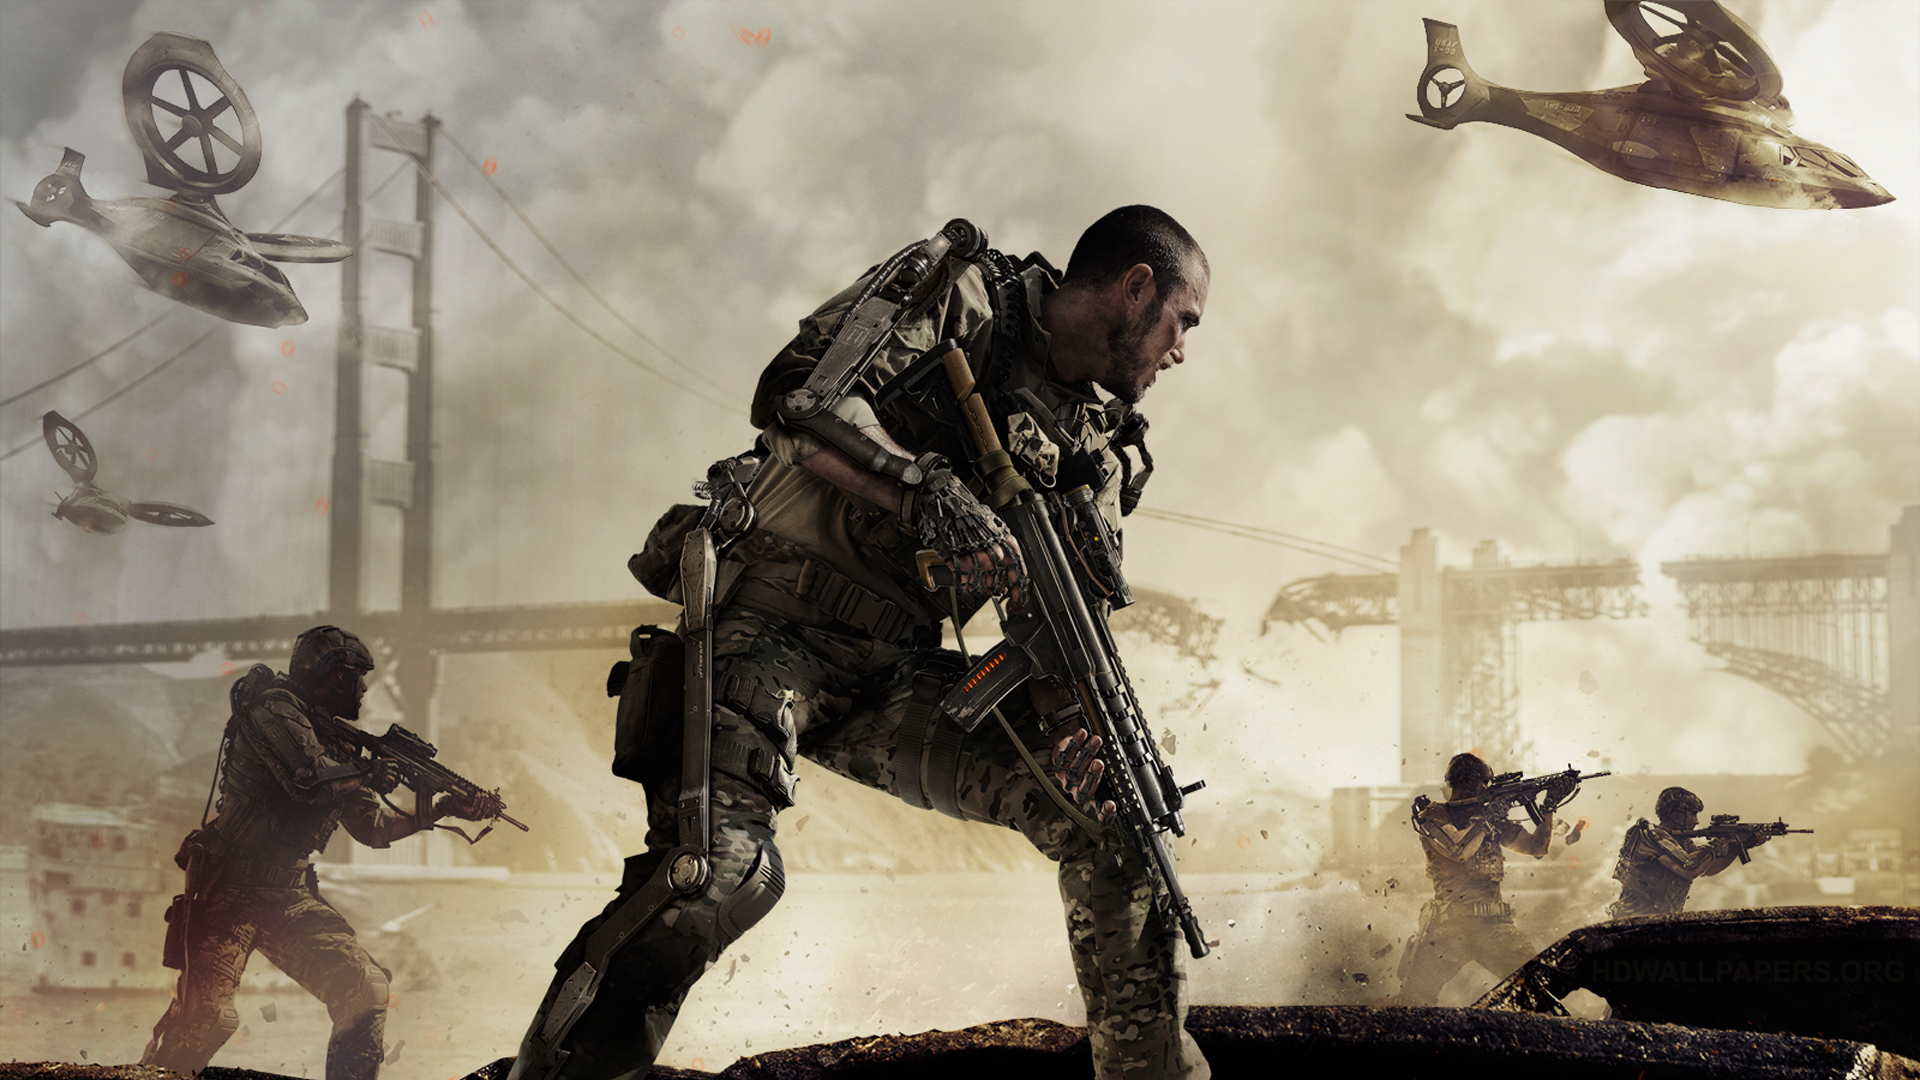 Call of Duty Advanced Warfare Wallpaper